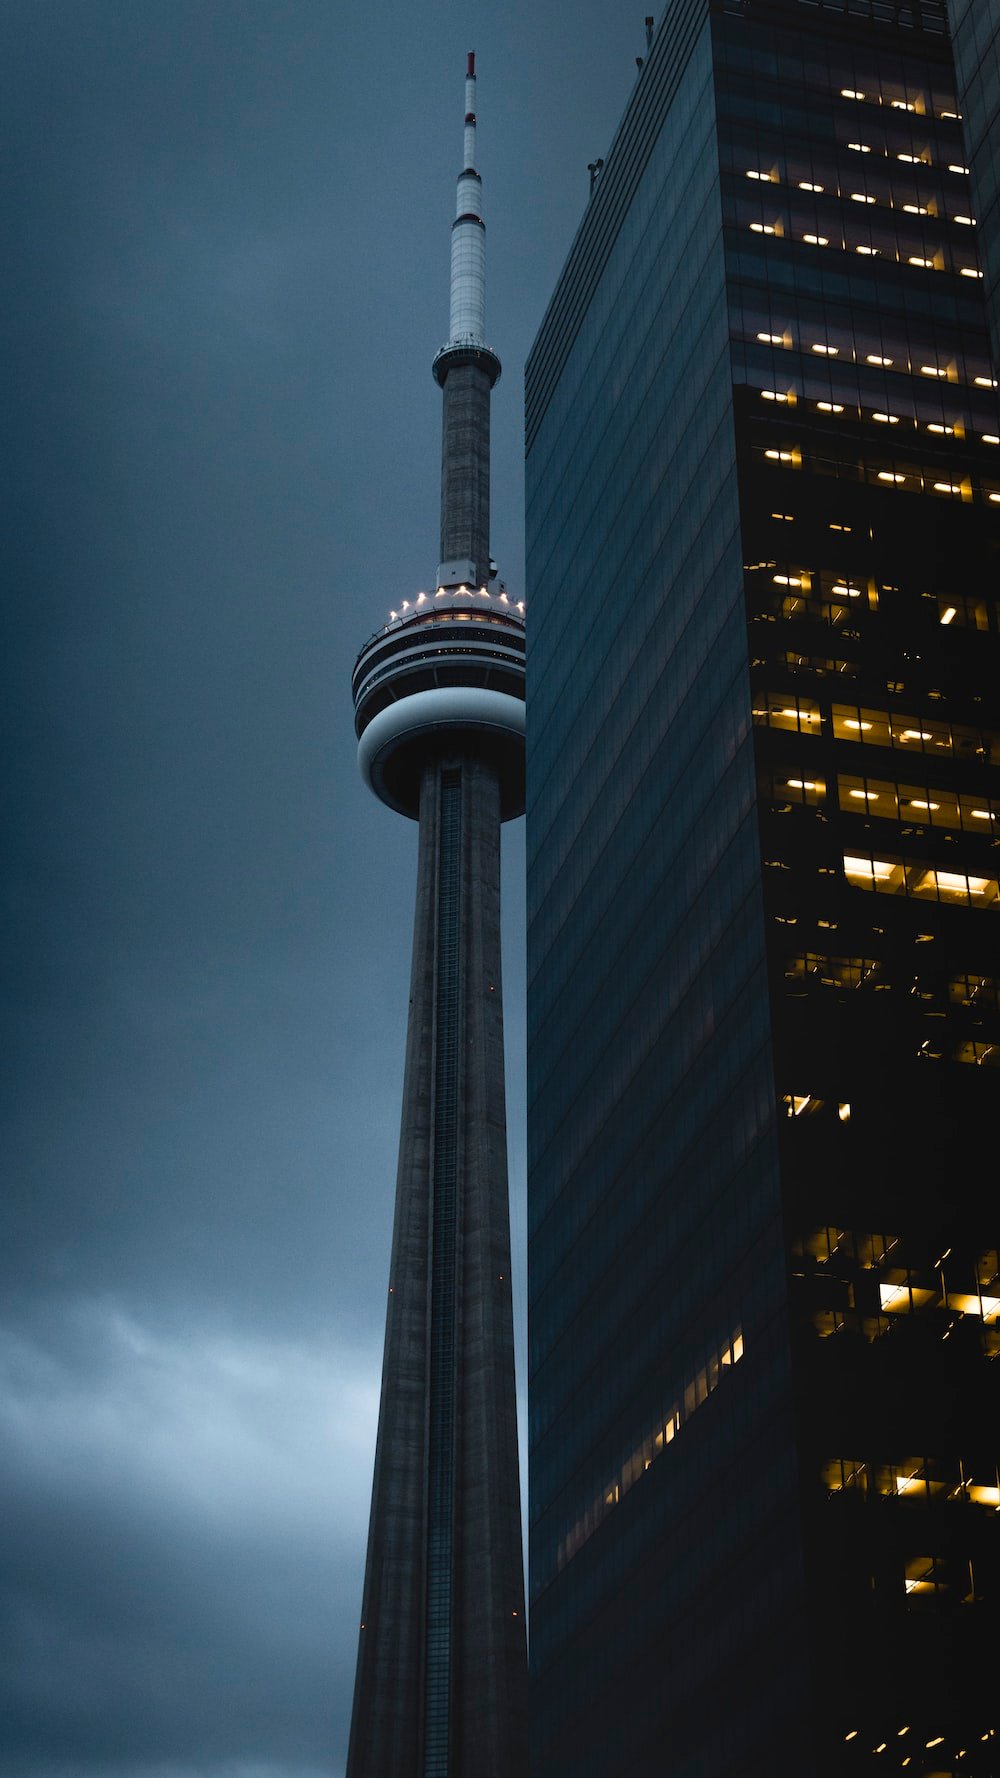 Toronto Night Picture. Download Free Image